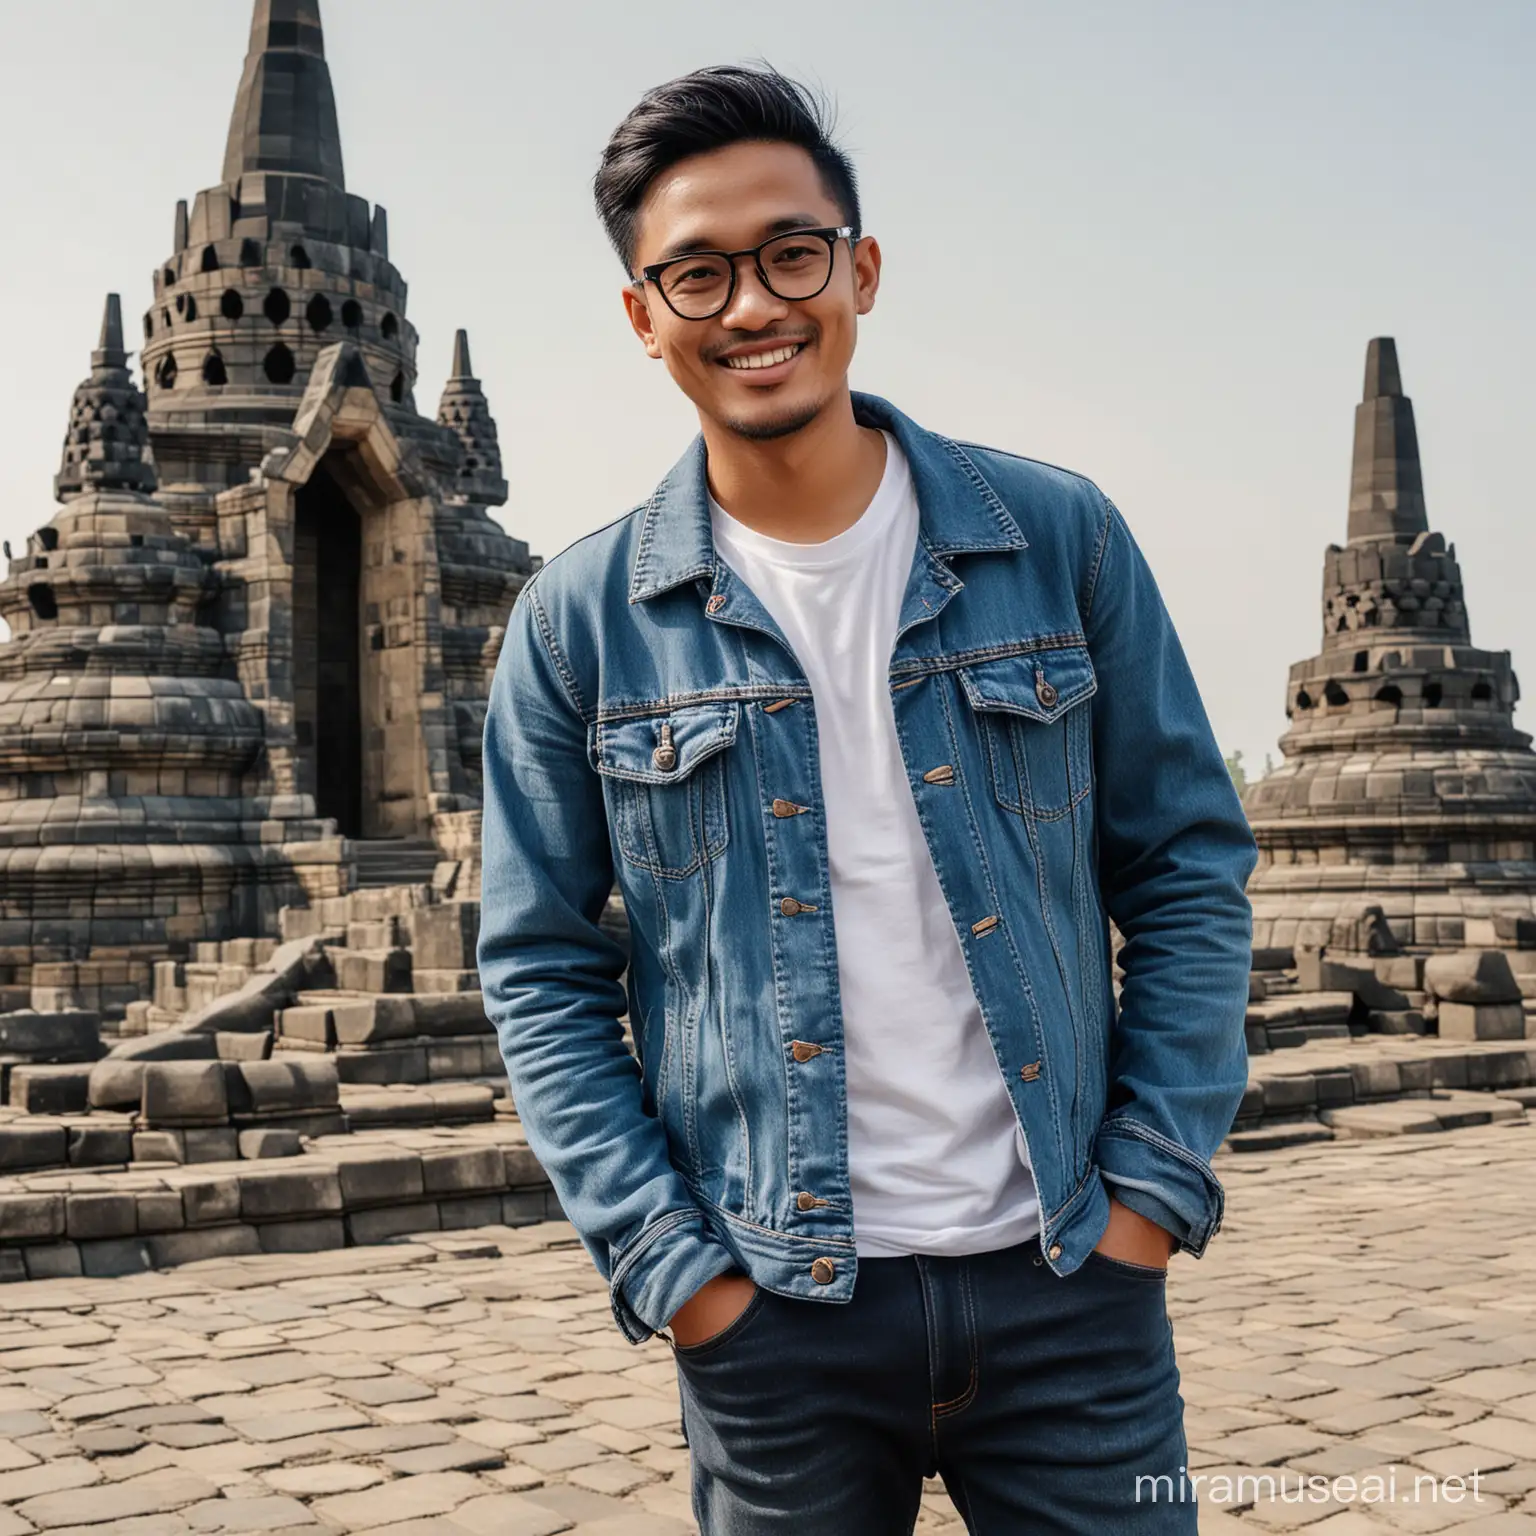 Buat gambar realistis seorang pria Indonesia berusia sekitar 30 tahun, pakai kacamata hitam, berdiri memakai kaos putih jaket jeans,  memakai jeans biru tua, sepatu sneaker warna merah (view long shot). Pria tersebut tersenyum sambil memegang kamera Nikon besar dengan lensa panjang. Latar belakang Candi Borobudur